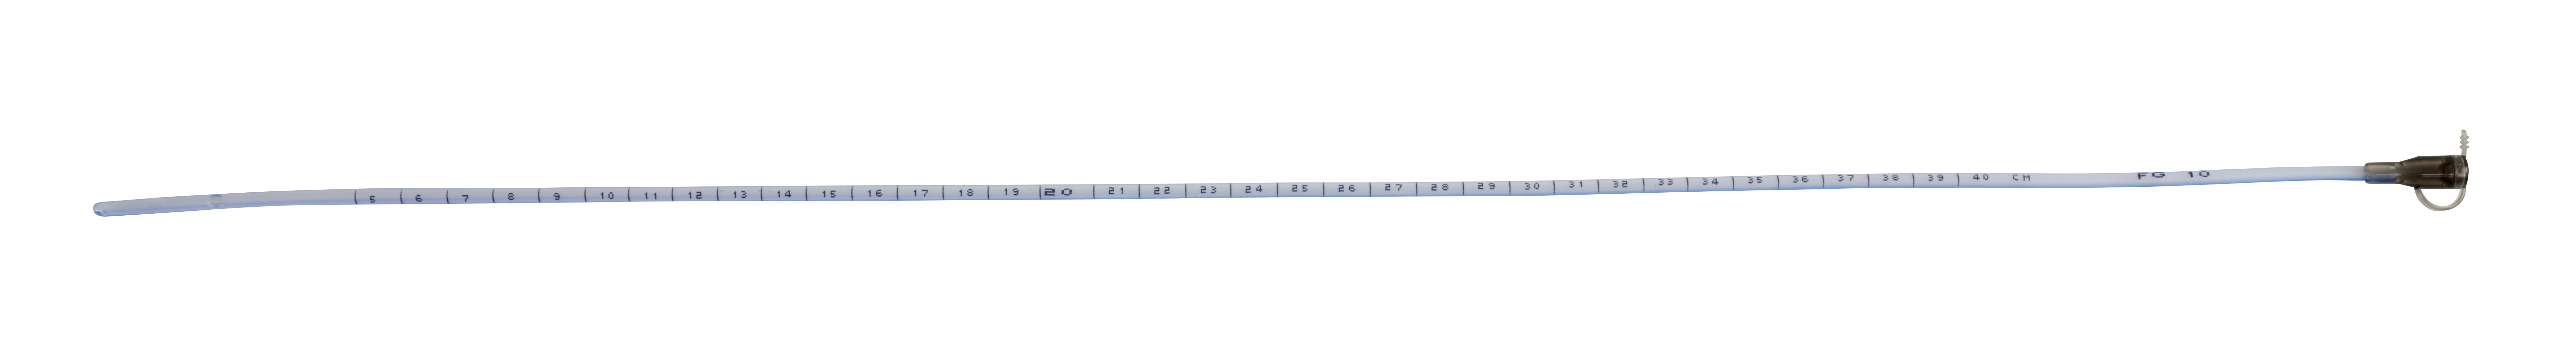 KRUUSE Feeding Tube, with depth markings, 3.3 mm x 50 cm, 10 Fr x 20'', 10/pk